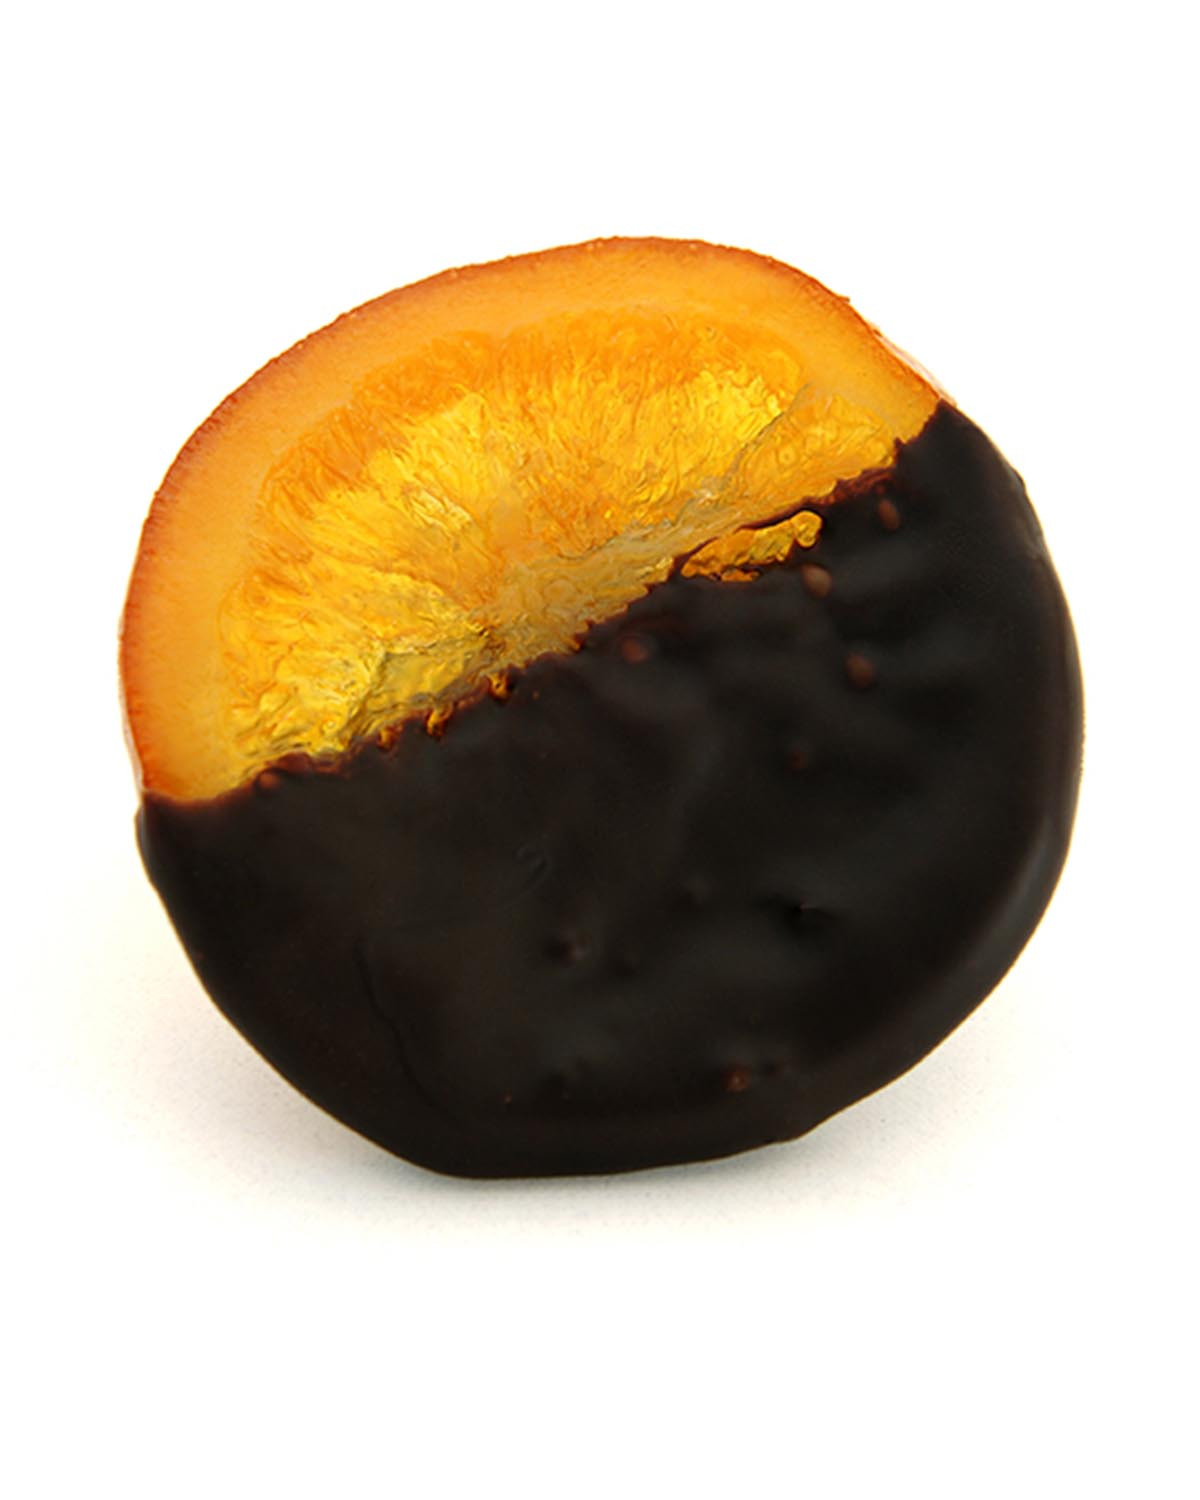 Rodaja de naranja confitada con chocolate negro